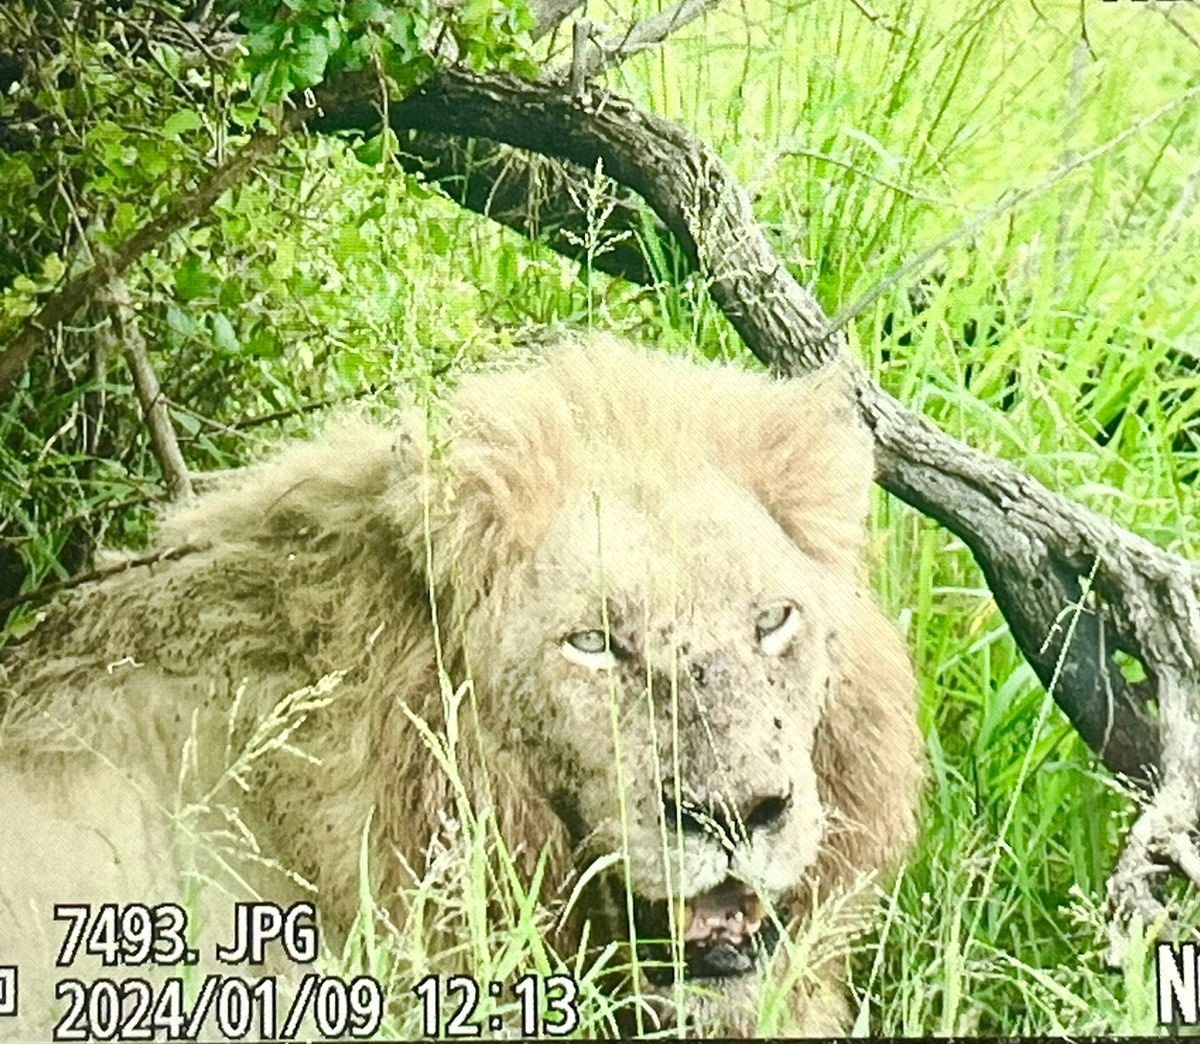 Kruger Sightings on X: 12:13pm 1 Lion stationary Casper. H6